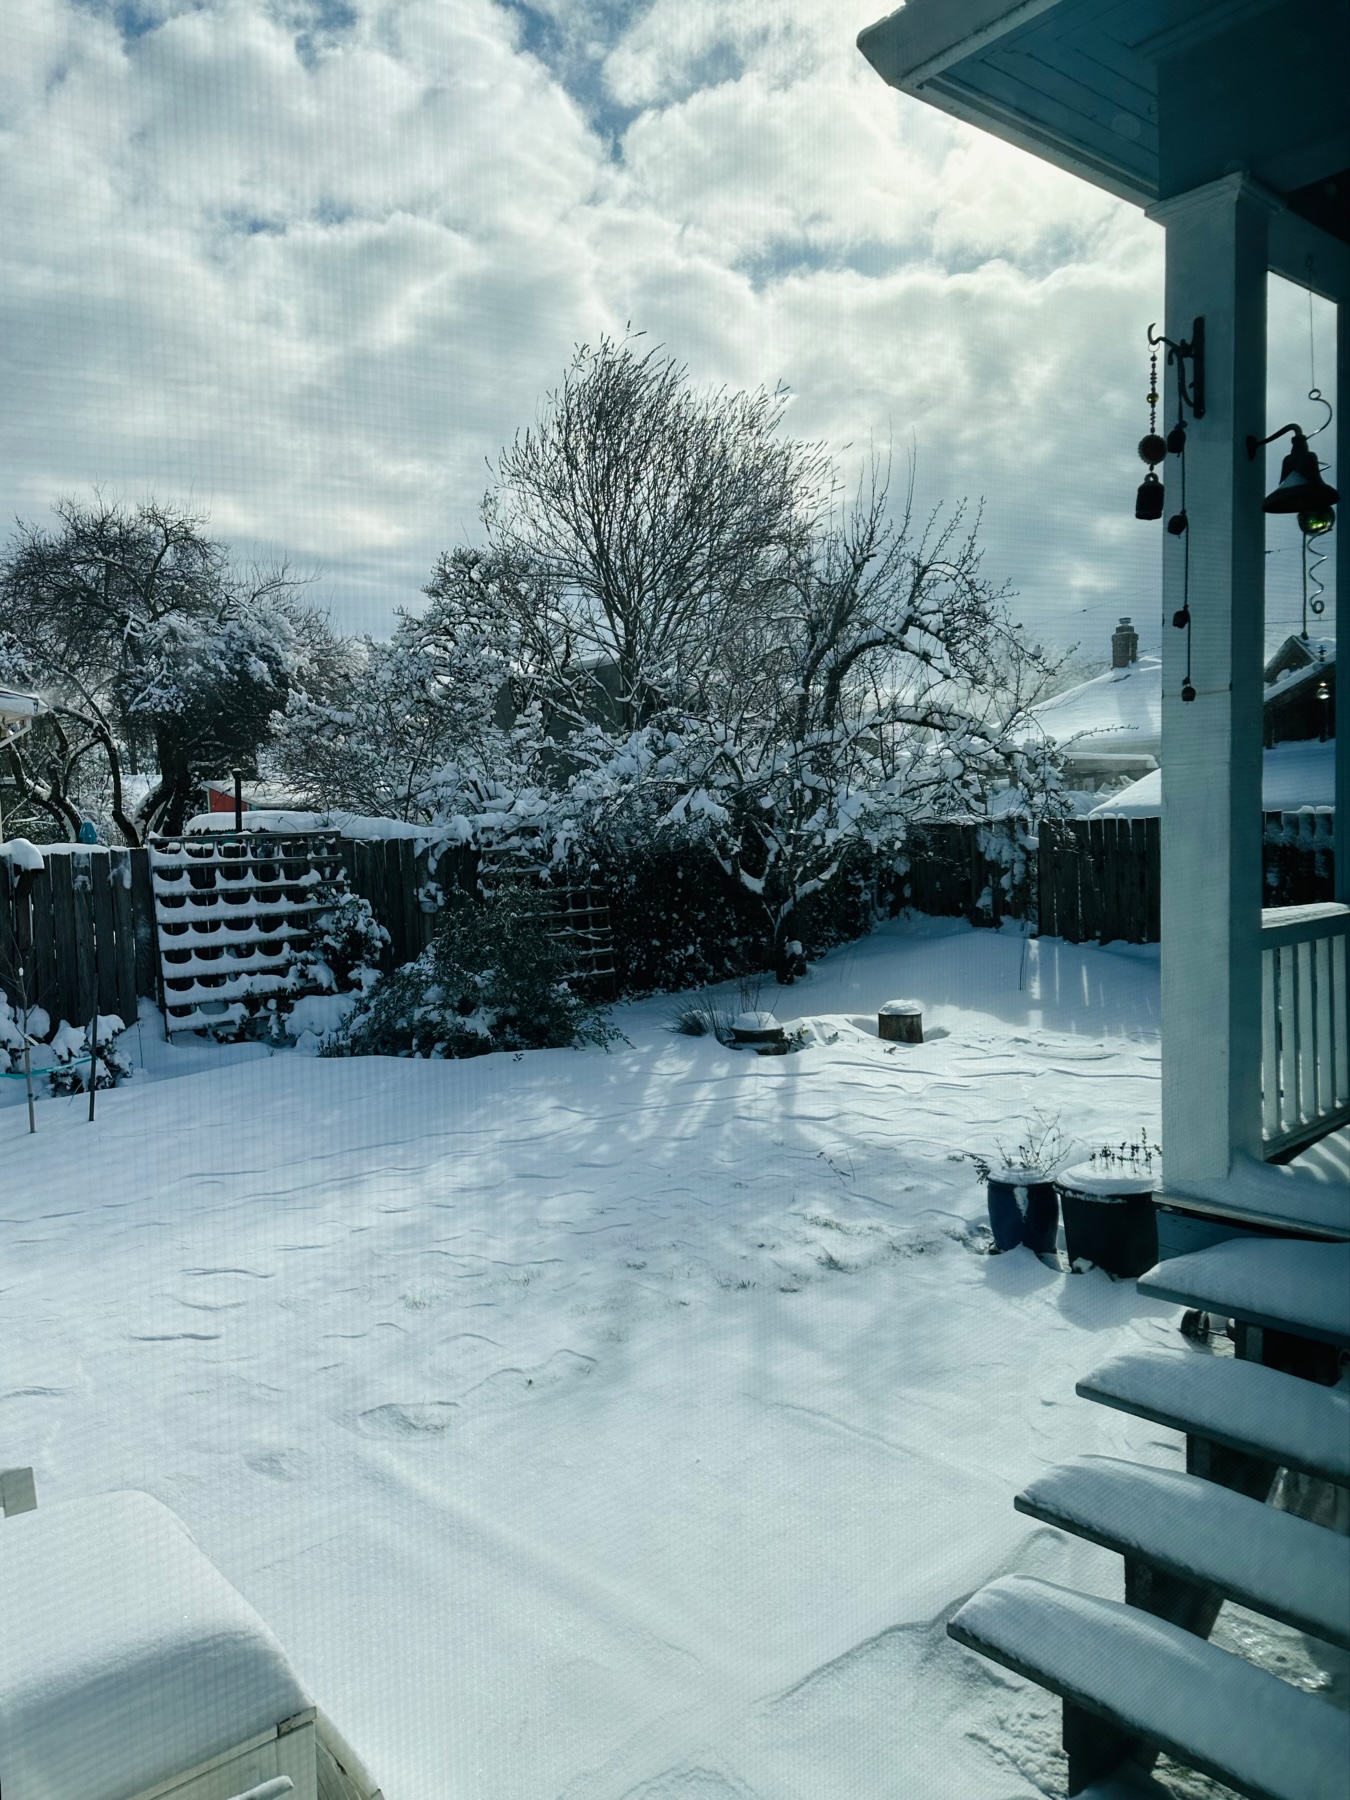 A backyard with snow everywhere. Partly cloudy sky.